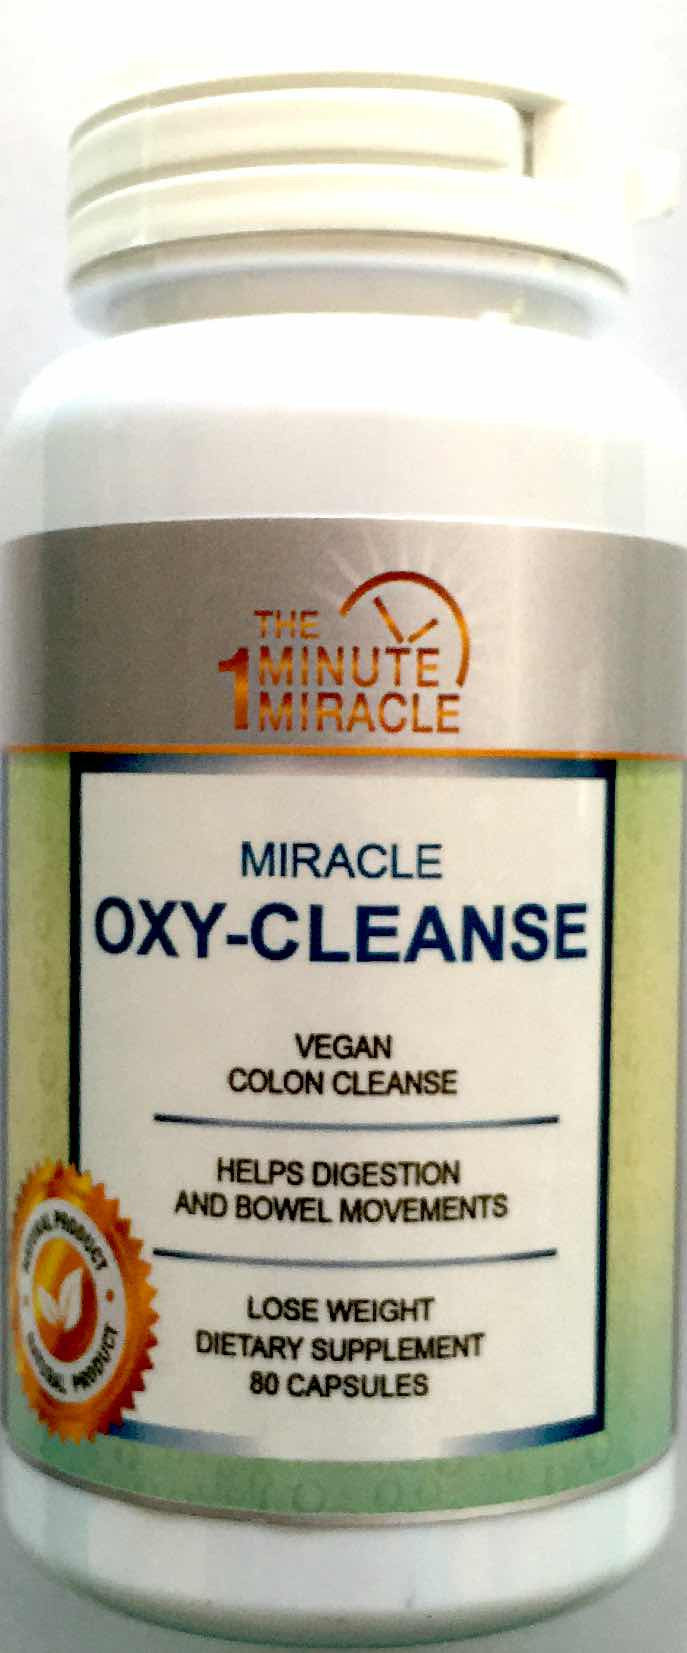 Oxy-Cleanse - Vegan Colon Cleanser - 1 Bottles - 80 Capsules.